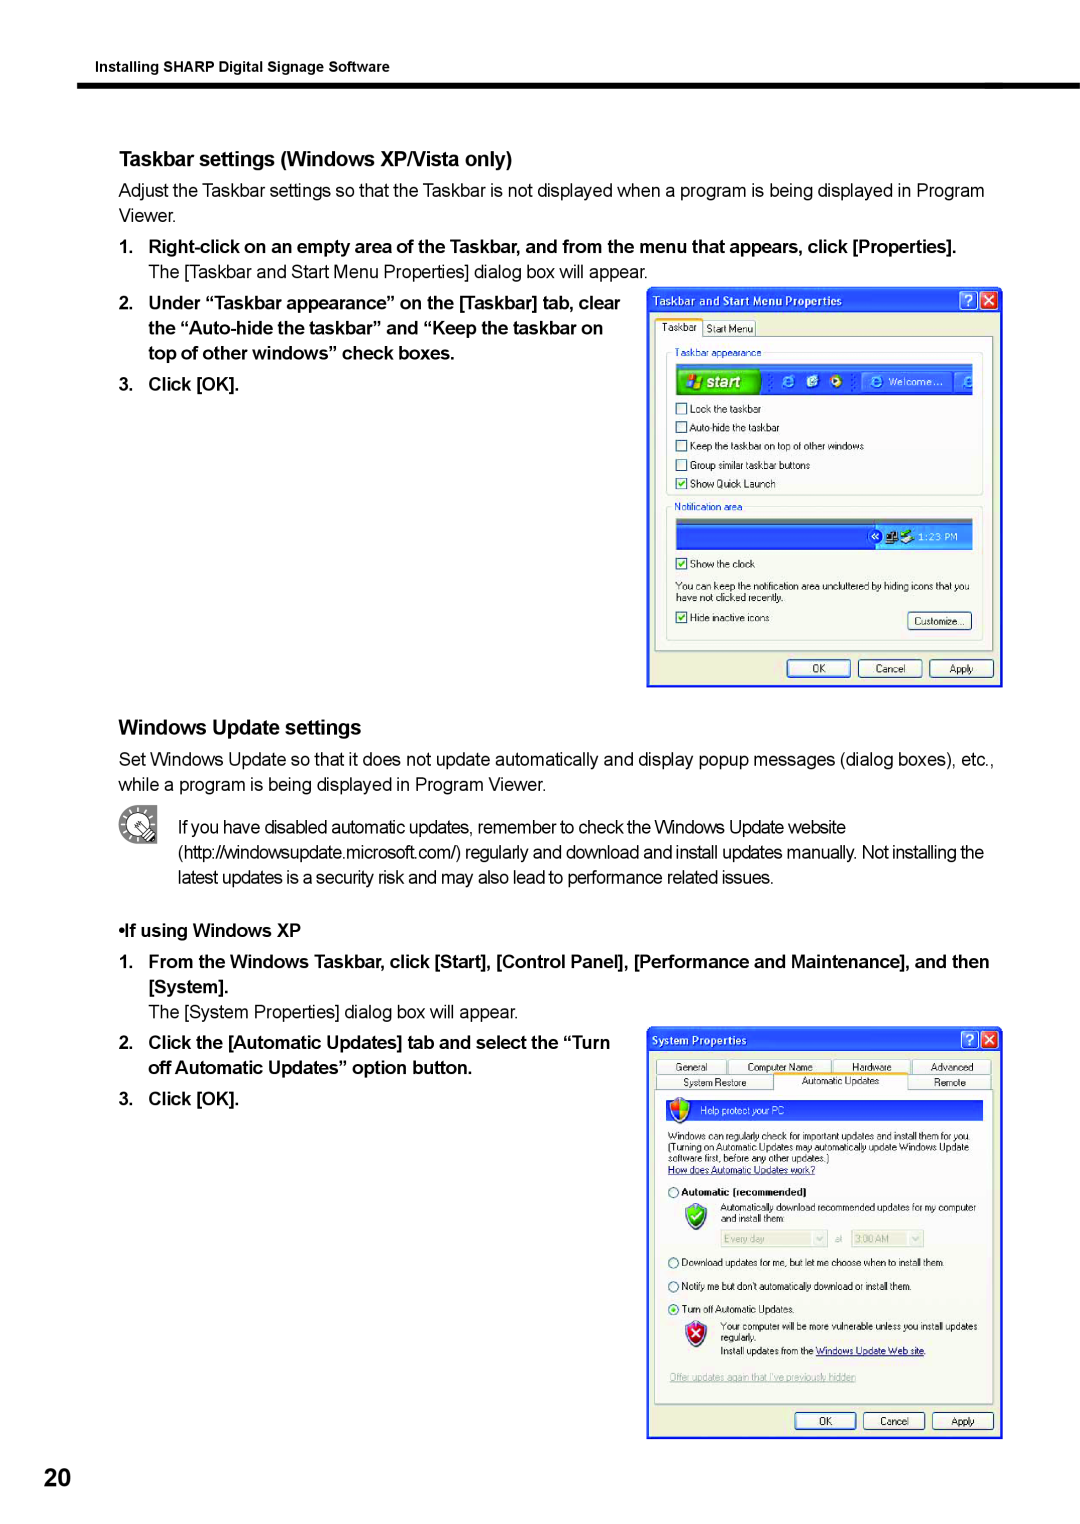 Sharp PNSV01 Taskbar settings Windows XP/Vista only, Windows Update settings, Click OK, If using Windows XP 